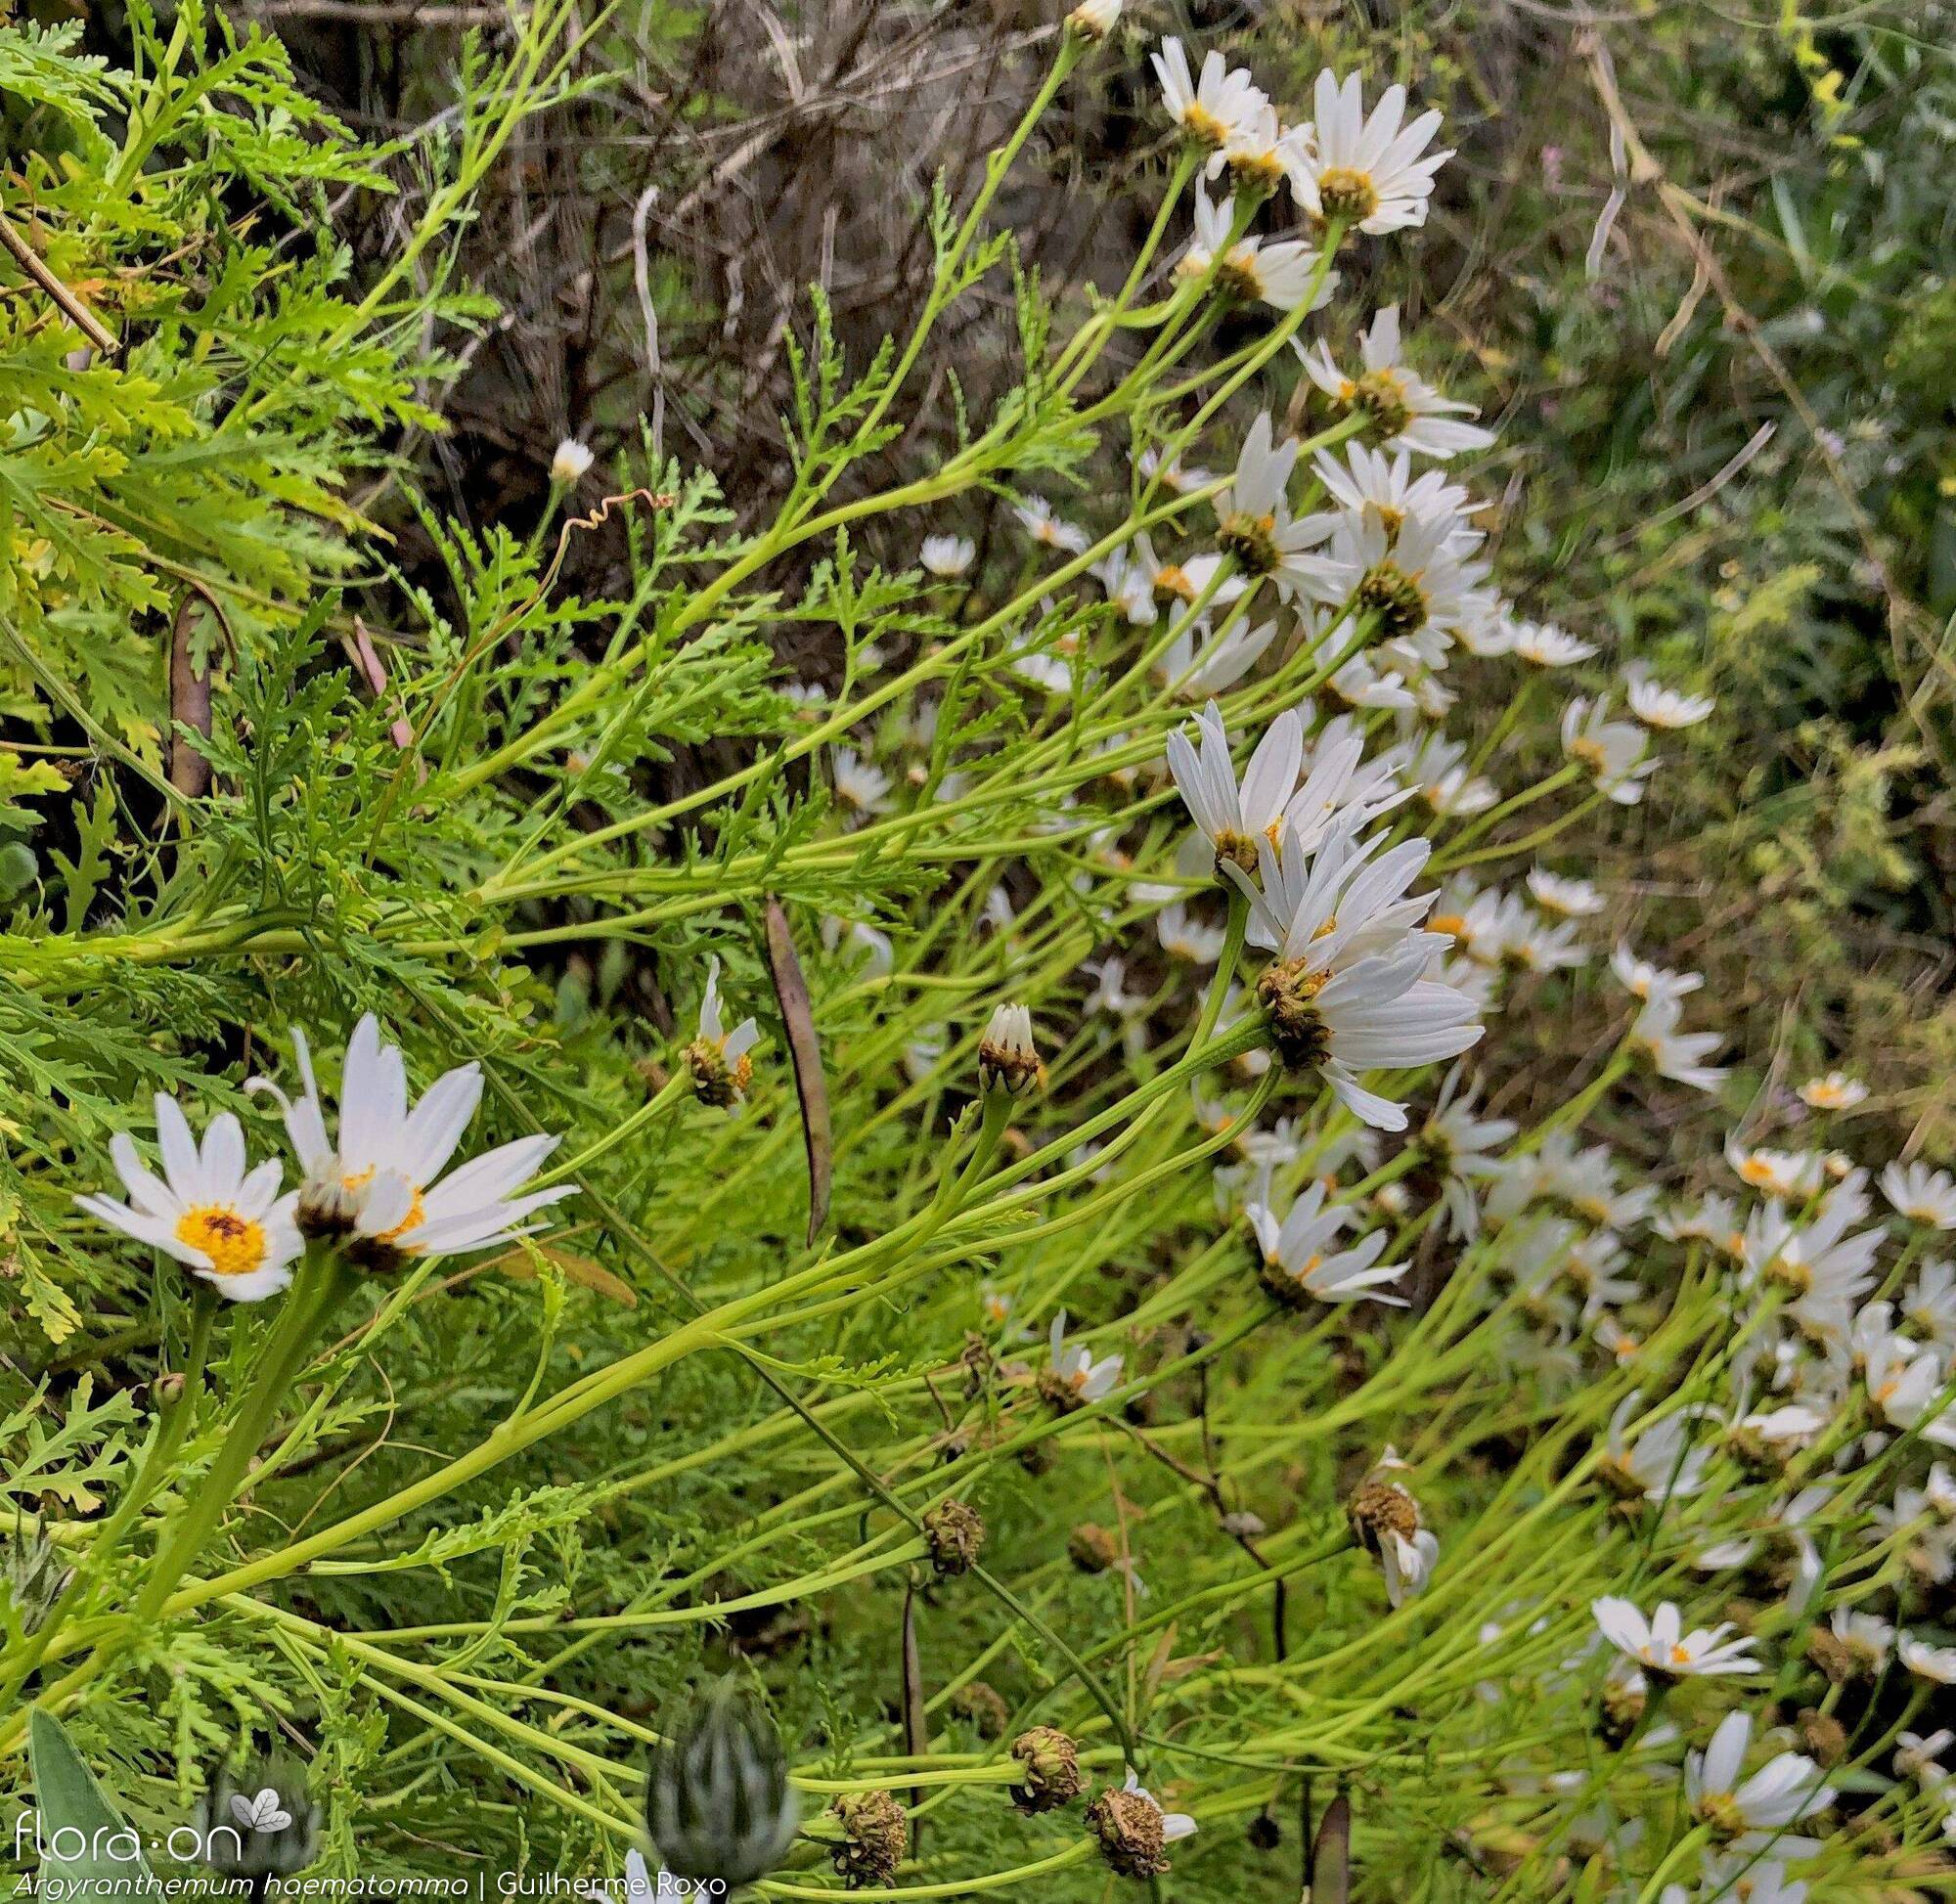 Argyranthemum haematomma - Hábito | Guilherme Roxo; CC BY-NC 4.0